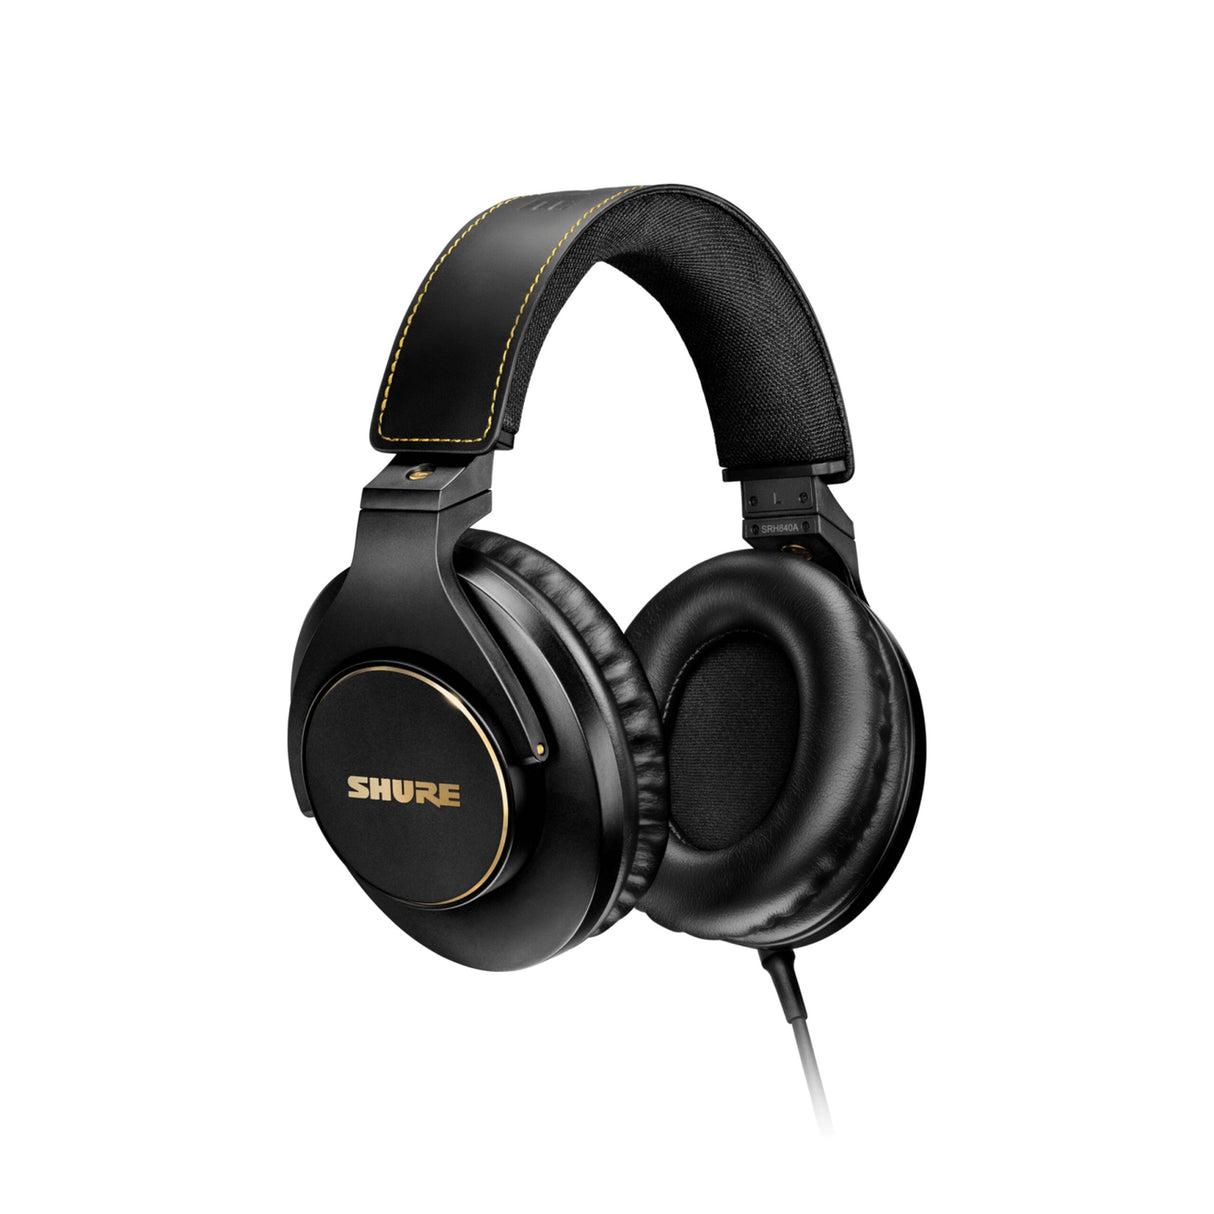 Shure SRH840A Professional Studio Over Ear Headphones (Used)